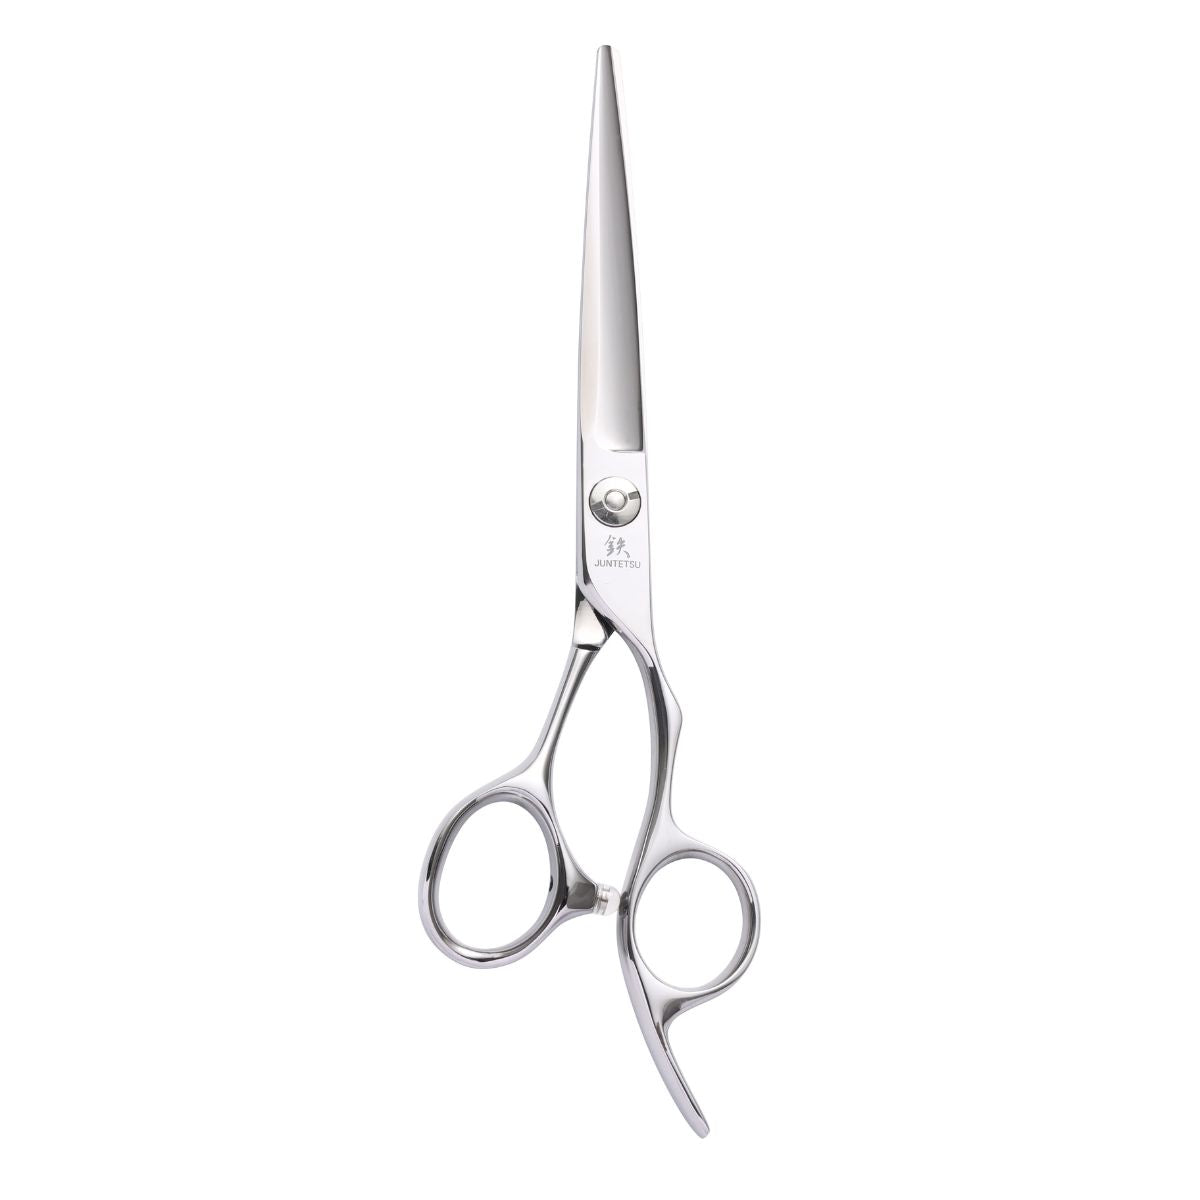 Juntetsu Cobalt Sword Hair Cutting Scissors